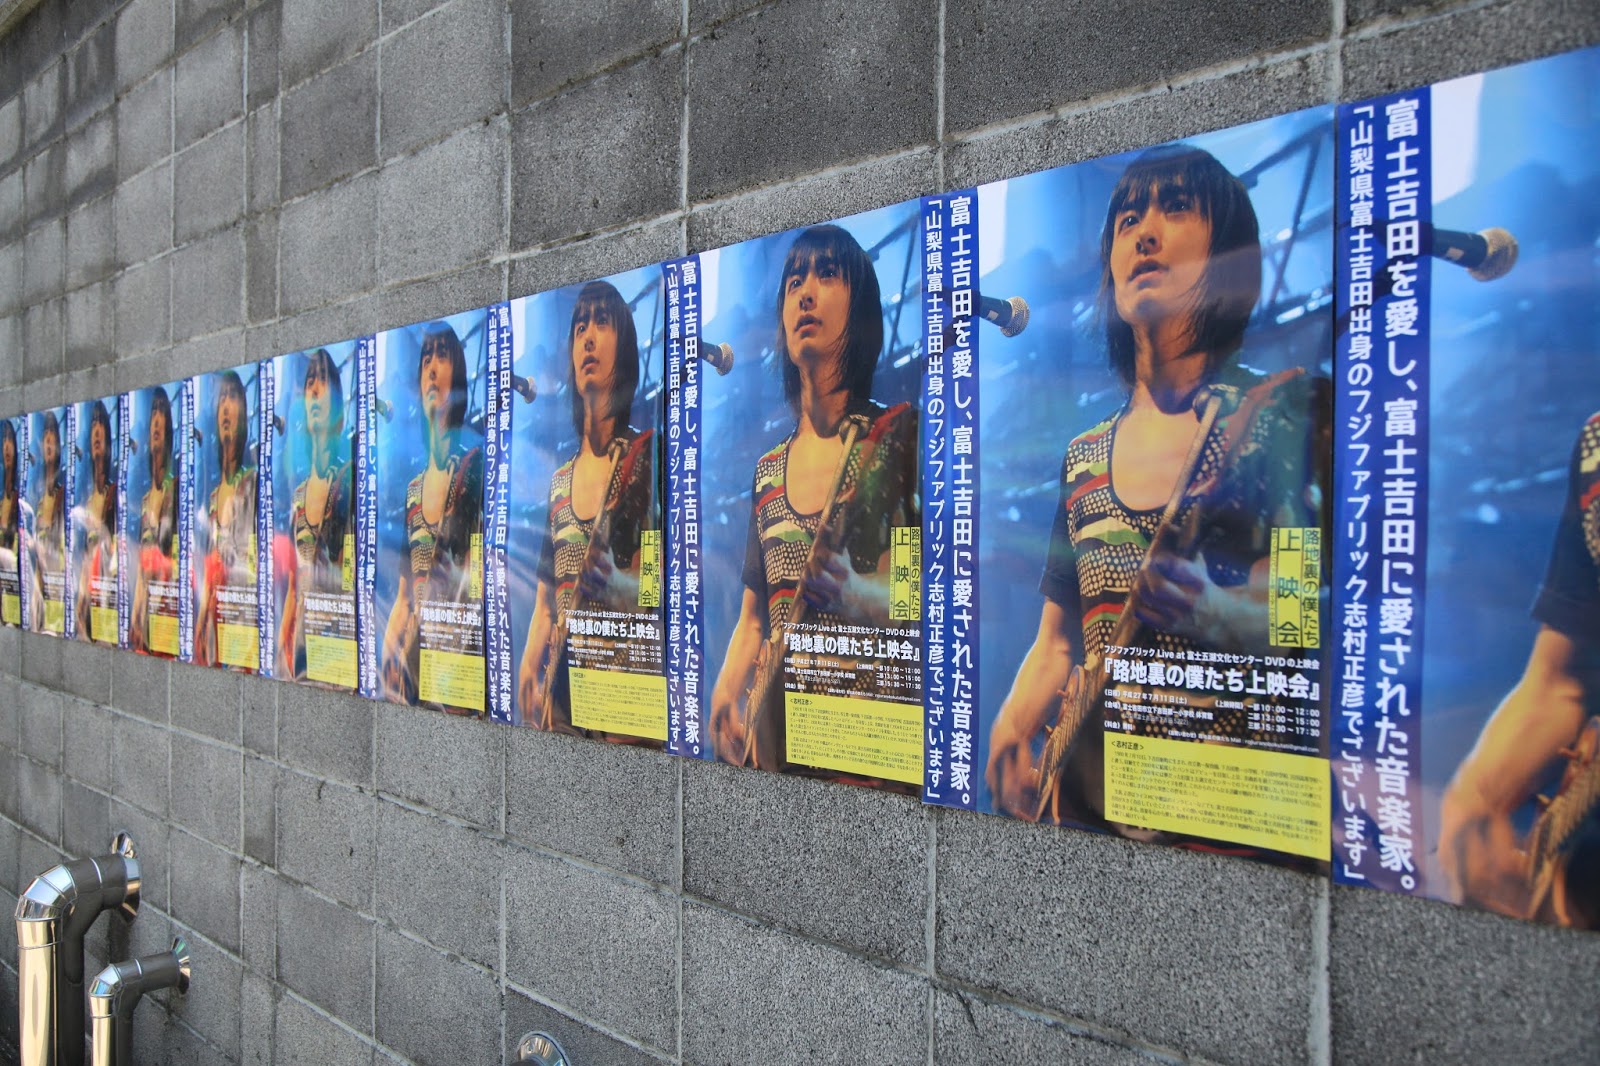 Fujifabric International Fan Site: 「フジファブリック live at 富士五湖文化センター」 ～ 路地裏の僕たち  presents ＤＶＤ上映会 2015年7月11日（土） レポート4